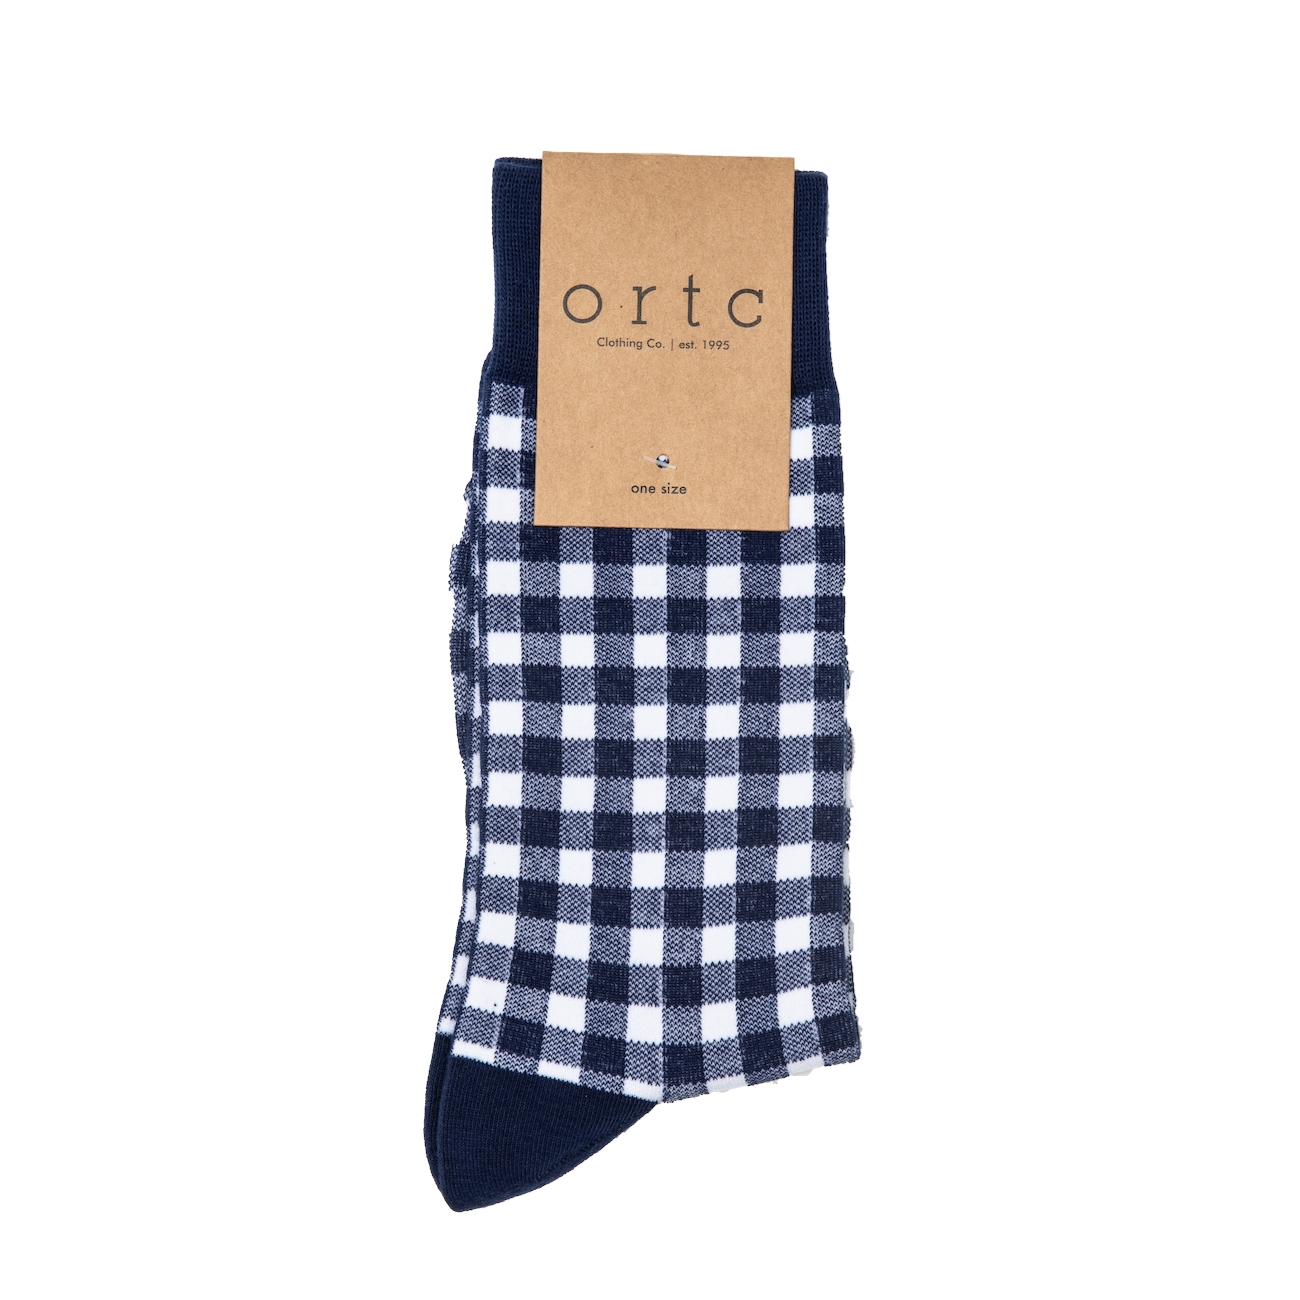 Ortc - Men's crew socks